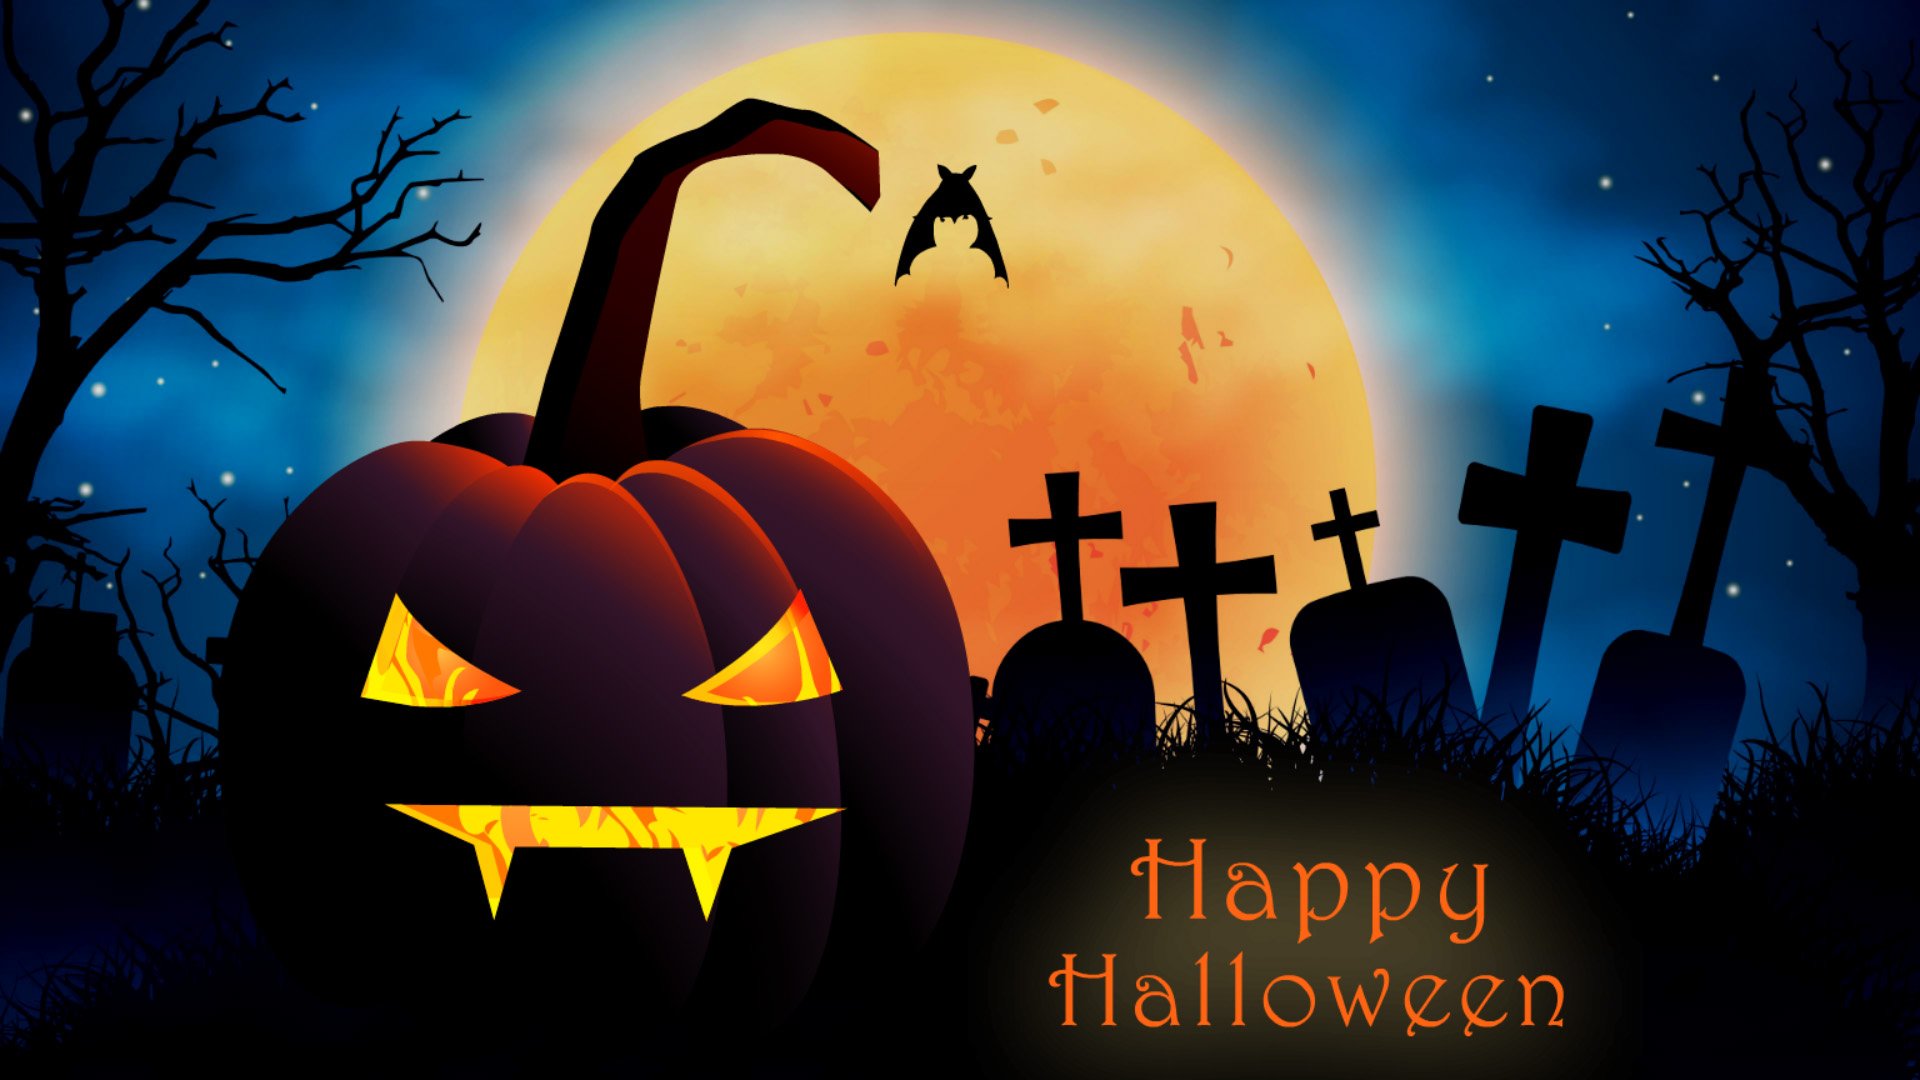 Halloween Mood Screensaver for Windows - Free Halloween Screensaver